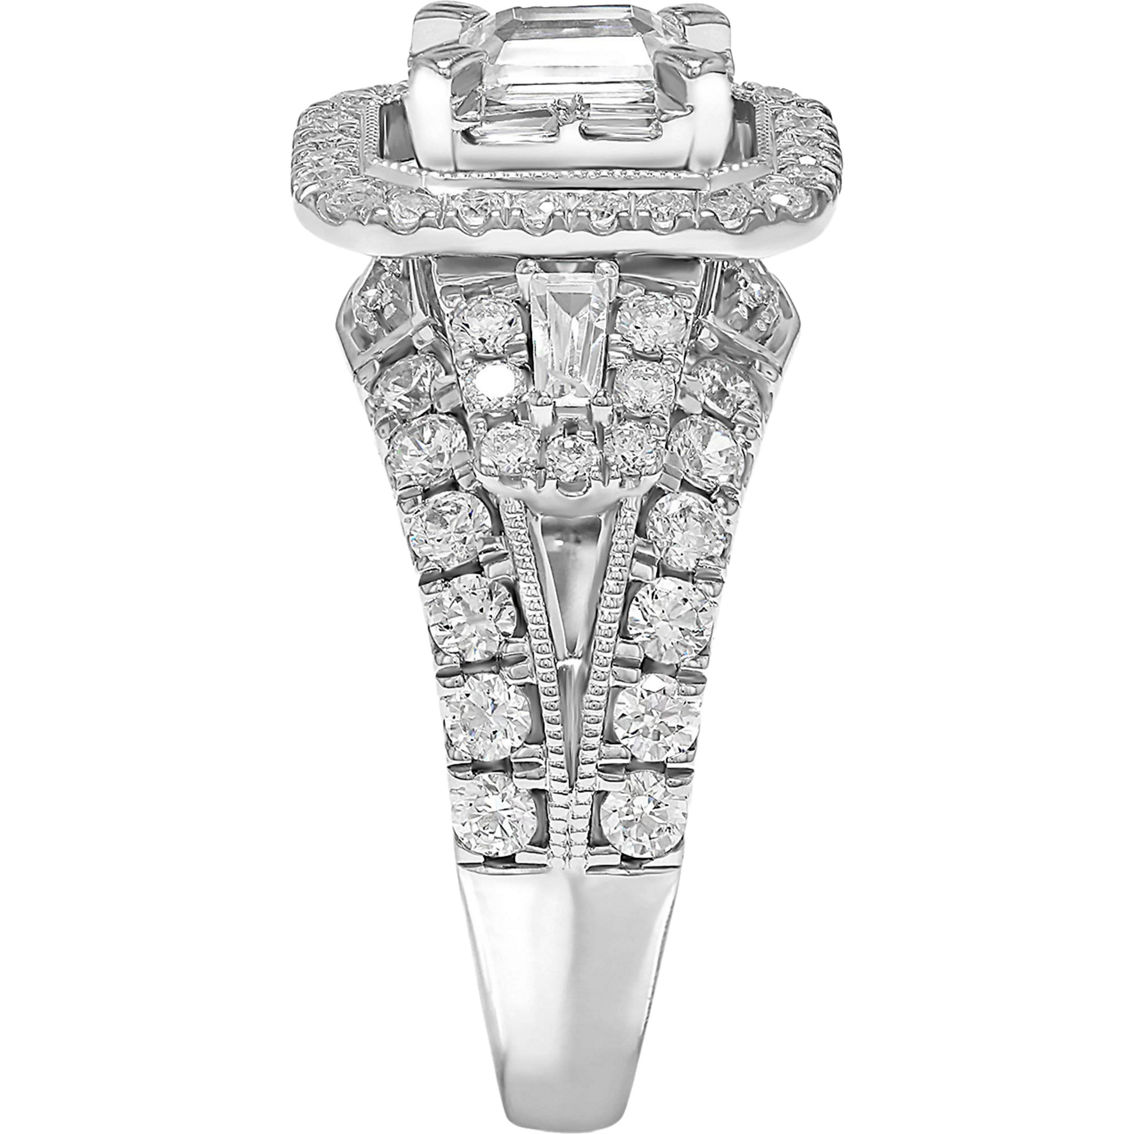 American Rose 14K White Gold 2 CTW Emerald Cut Diamond Engagement Ring - Image 4 of 5